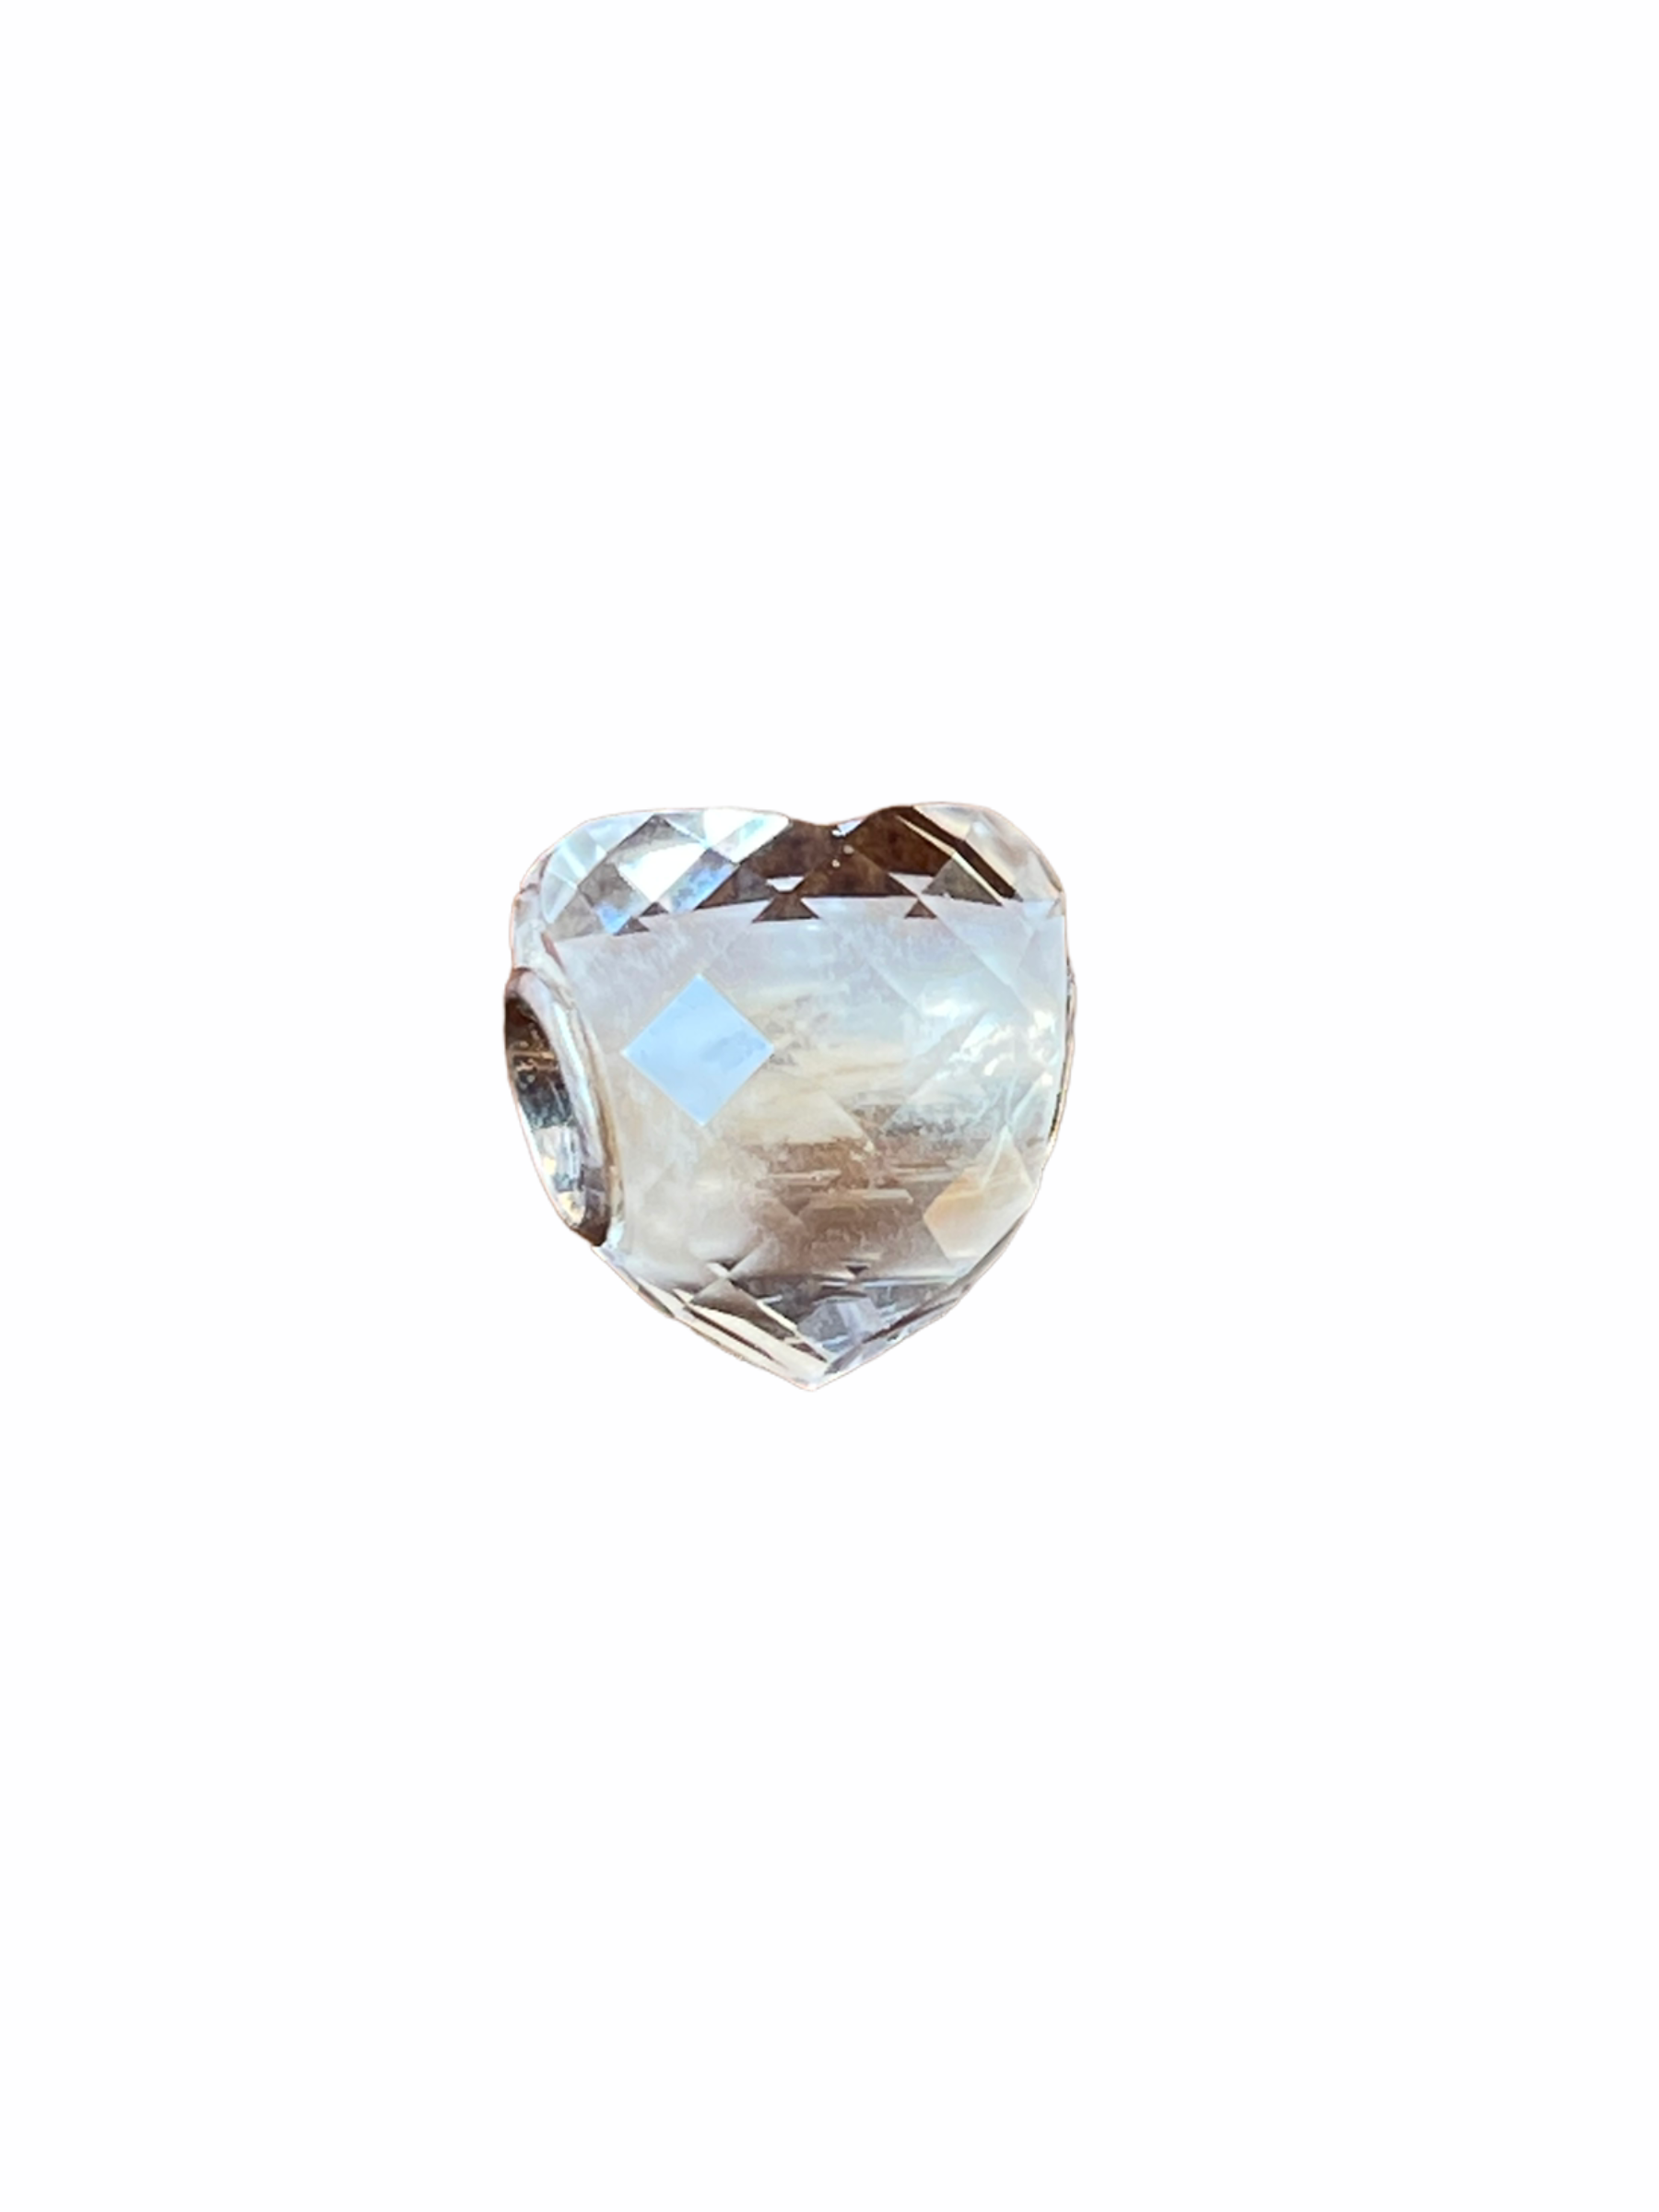 Clear Quartz Heart Bead Valkyrie Gems Beads 3